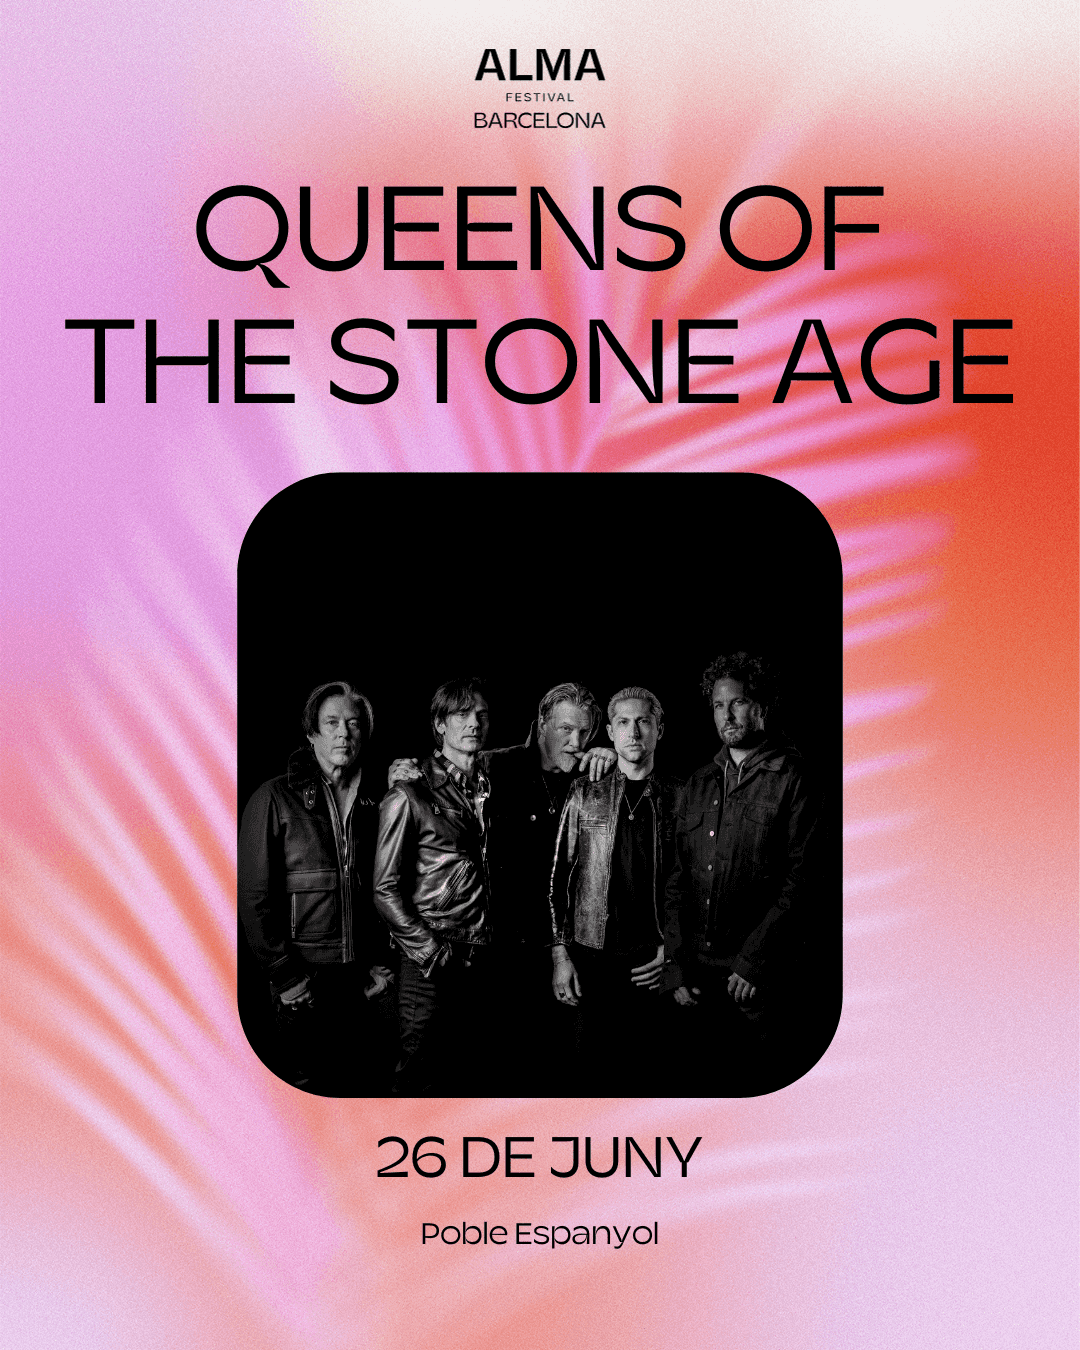 Entradas de segunda mano para Queens of the Stone Age Barcelona